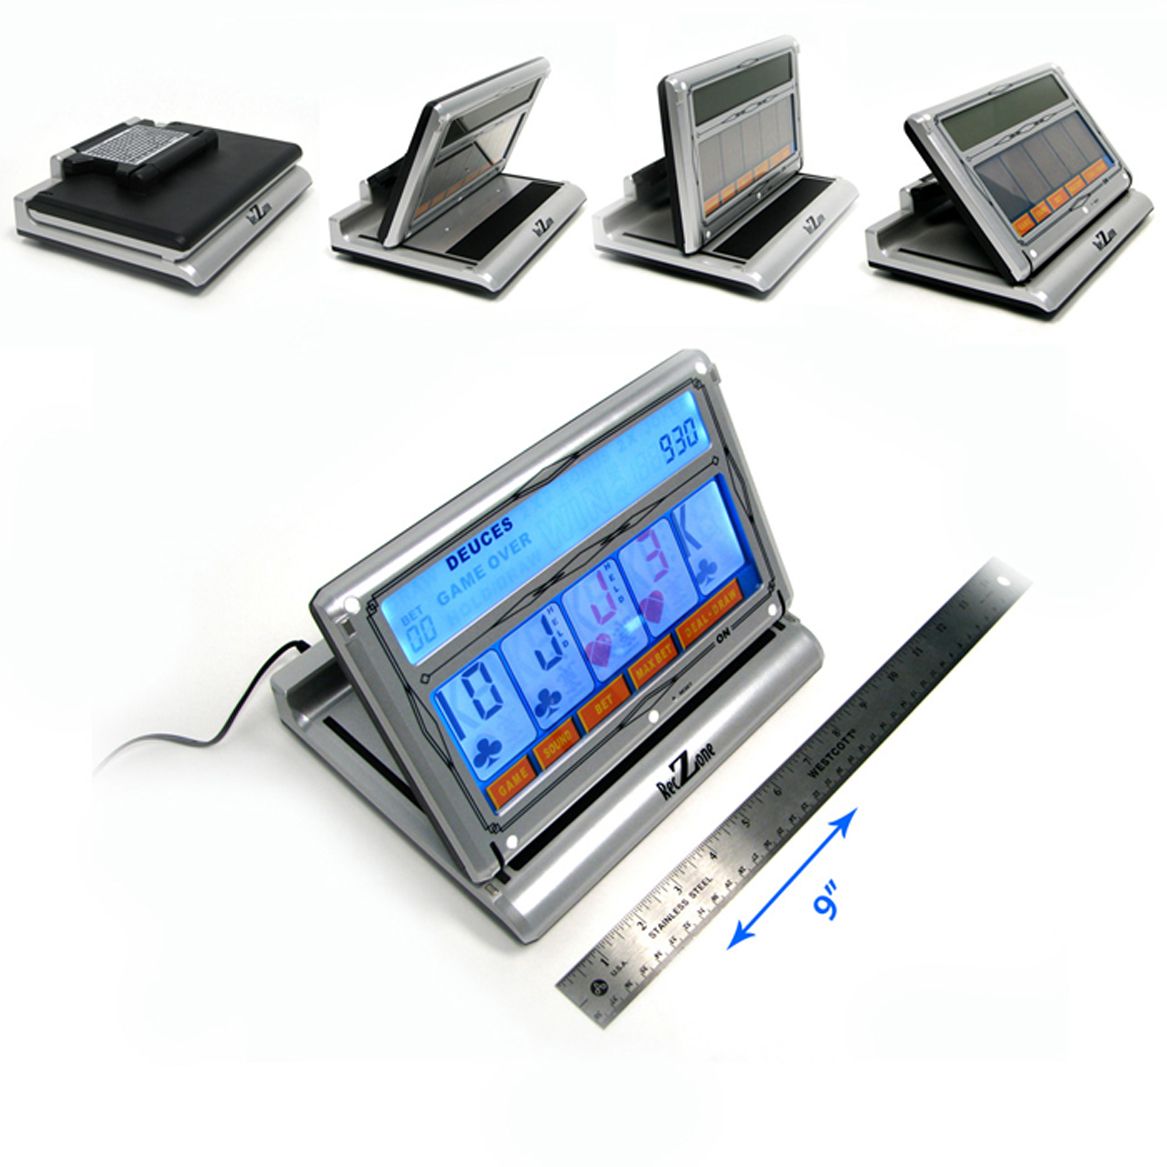 Trademark Laptop Video Poker Machine - Touch Screen - Like the Casinos